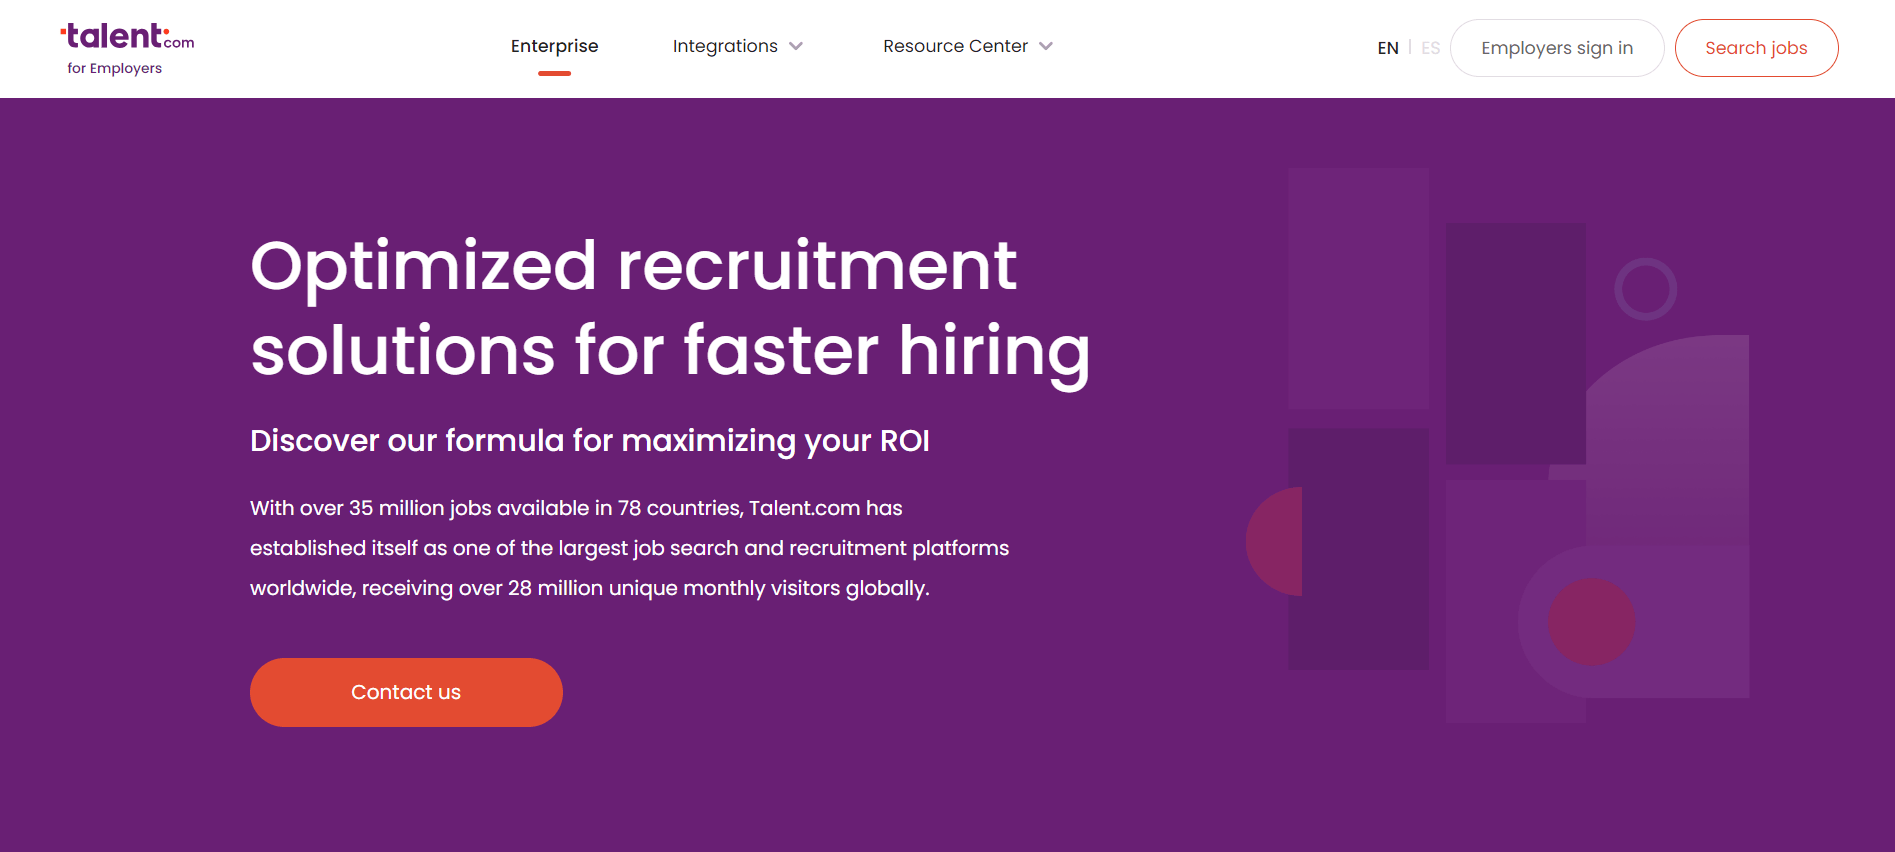 talent.com homepage